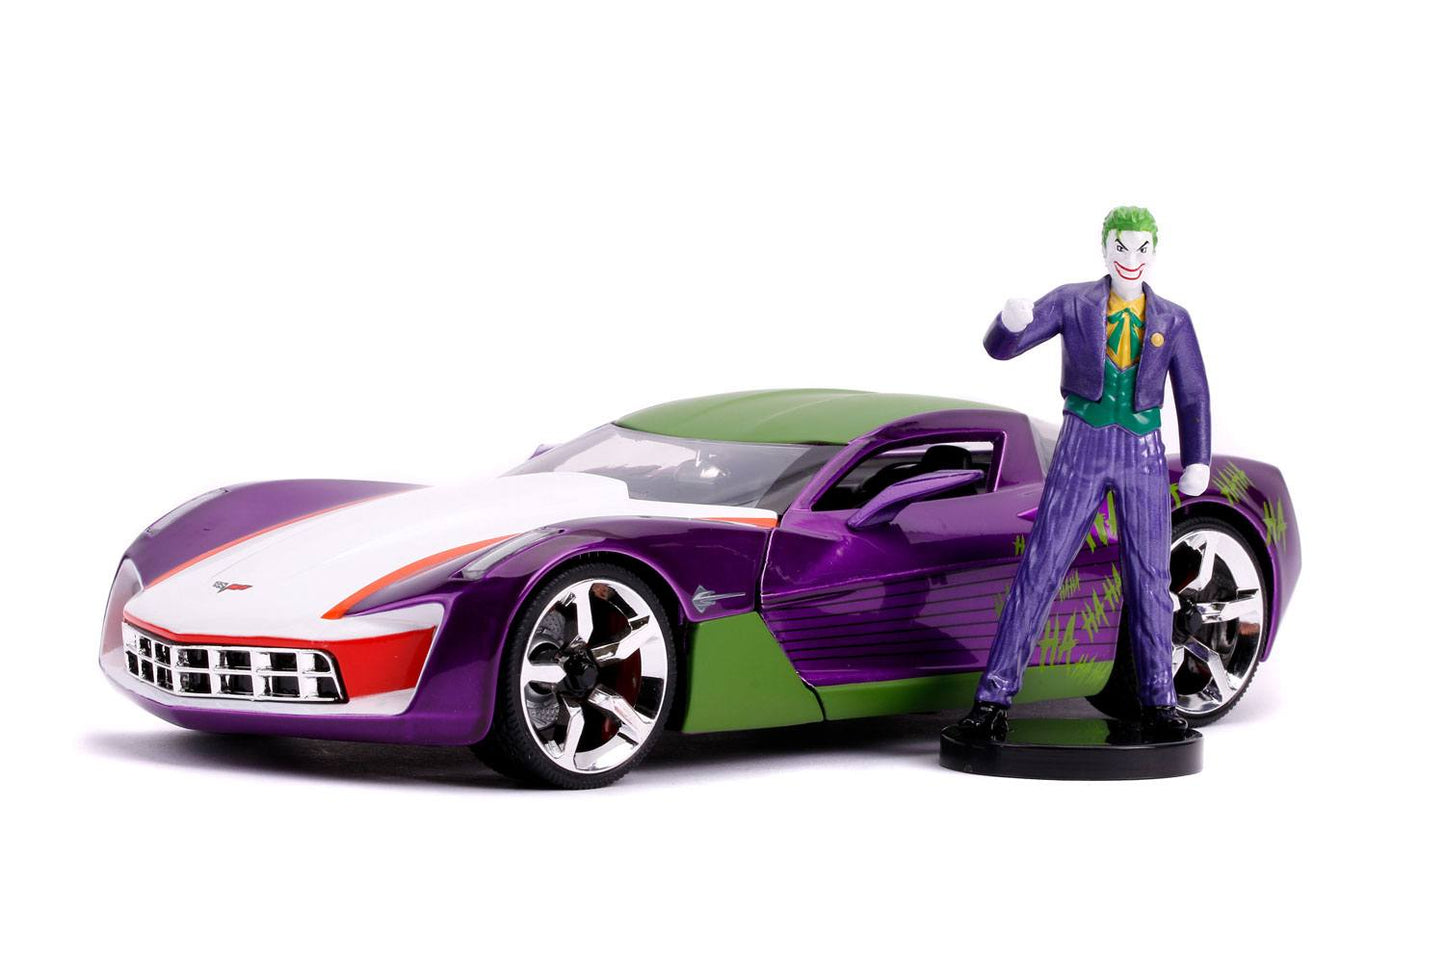 DC Comics Diecast Model 1/24 2009 Chevy Corvette Stingray with Joker Figure - cars, Chevy Corvette Stingray, DC Comics, diecast, diecast car, jada toys, The Joker - Gadgetz Home